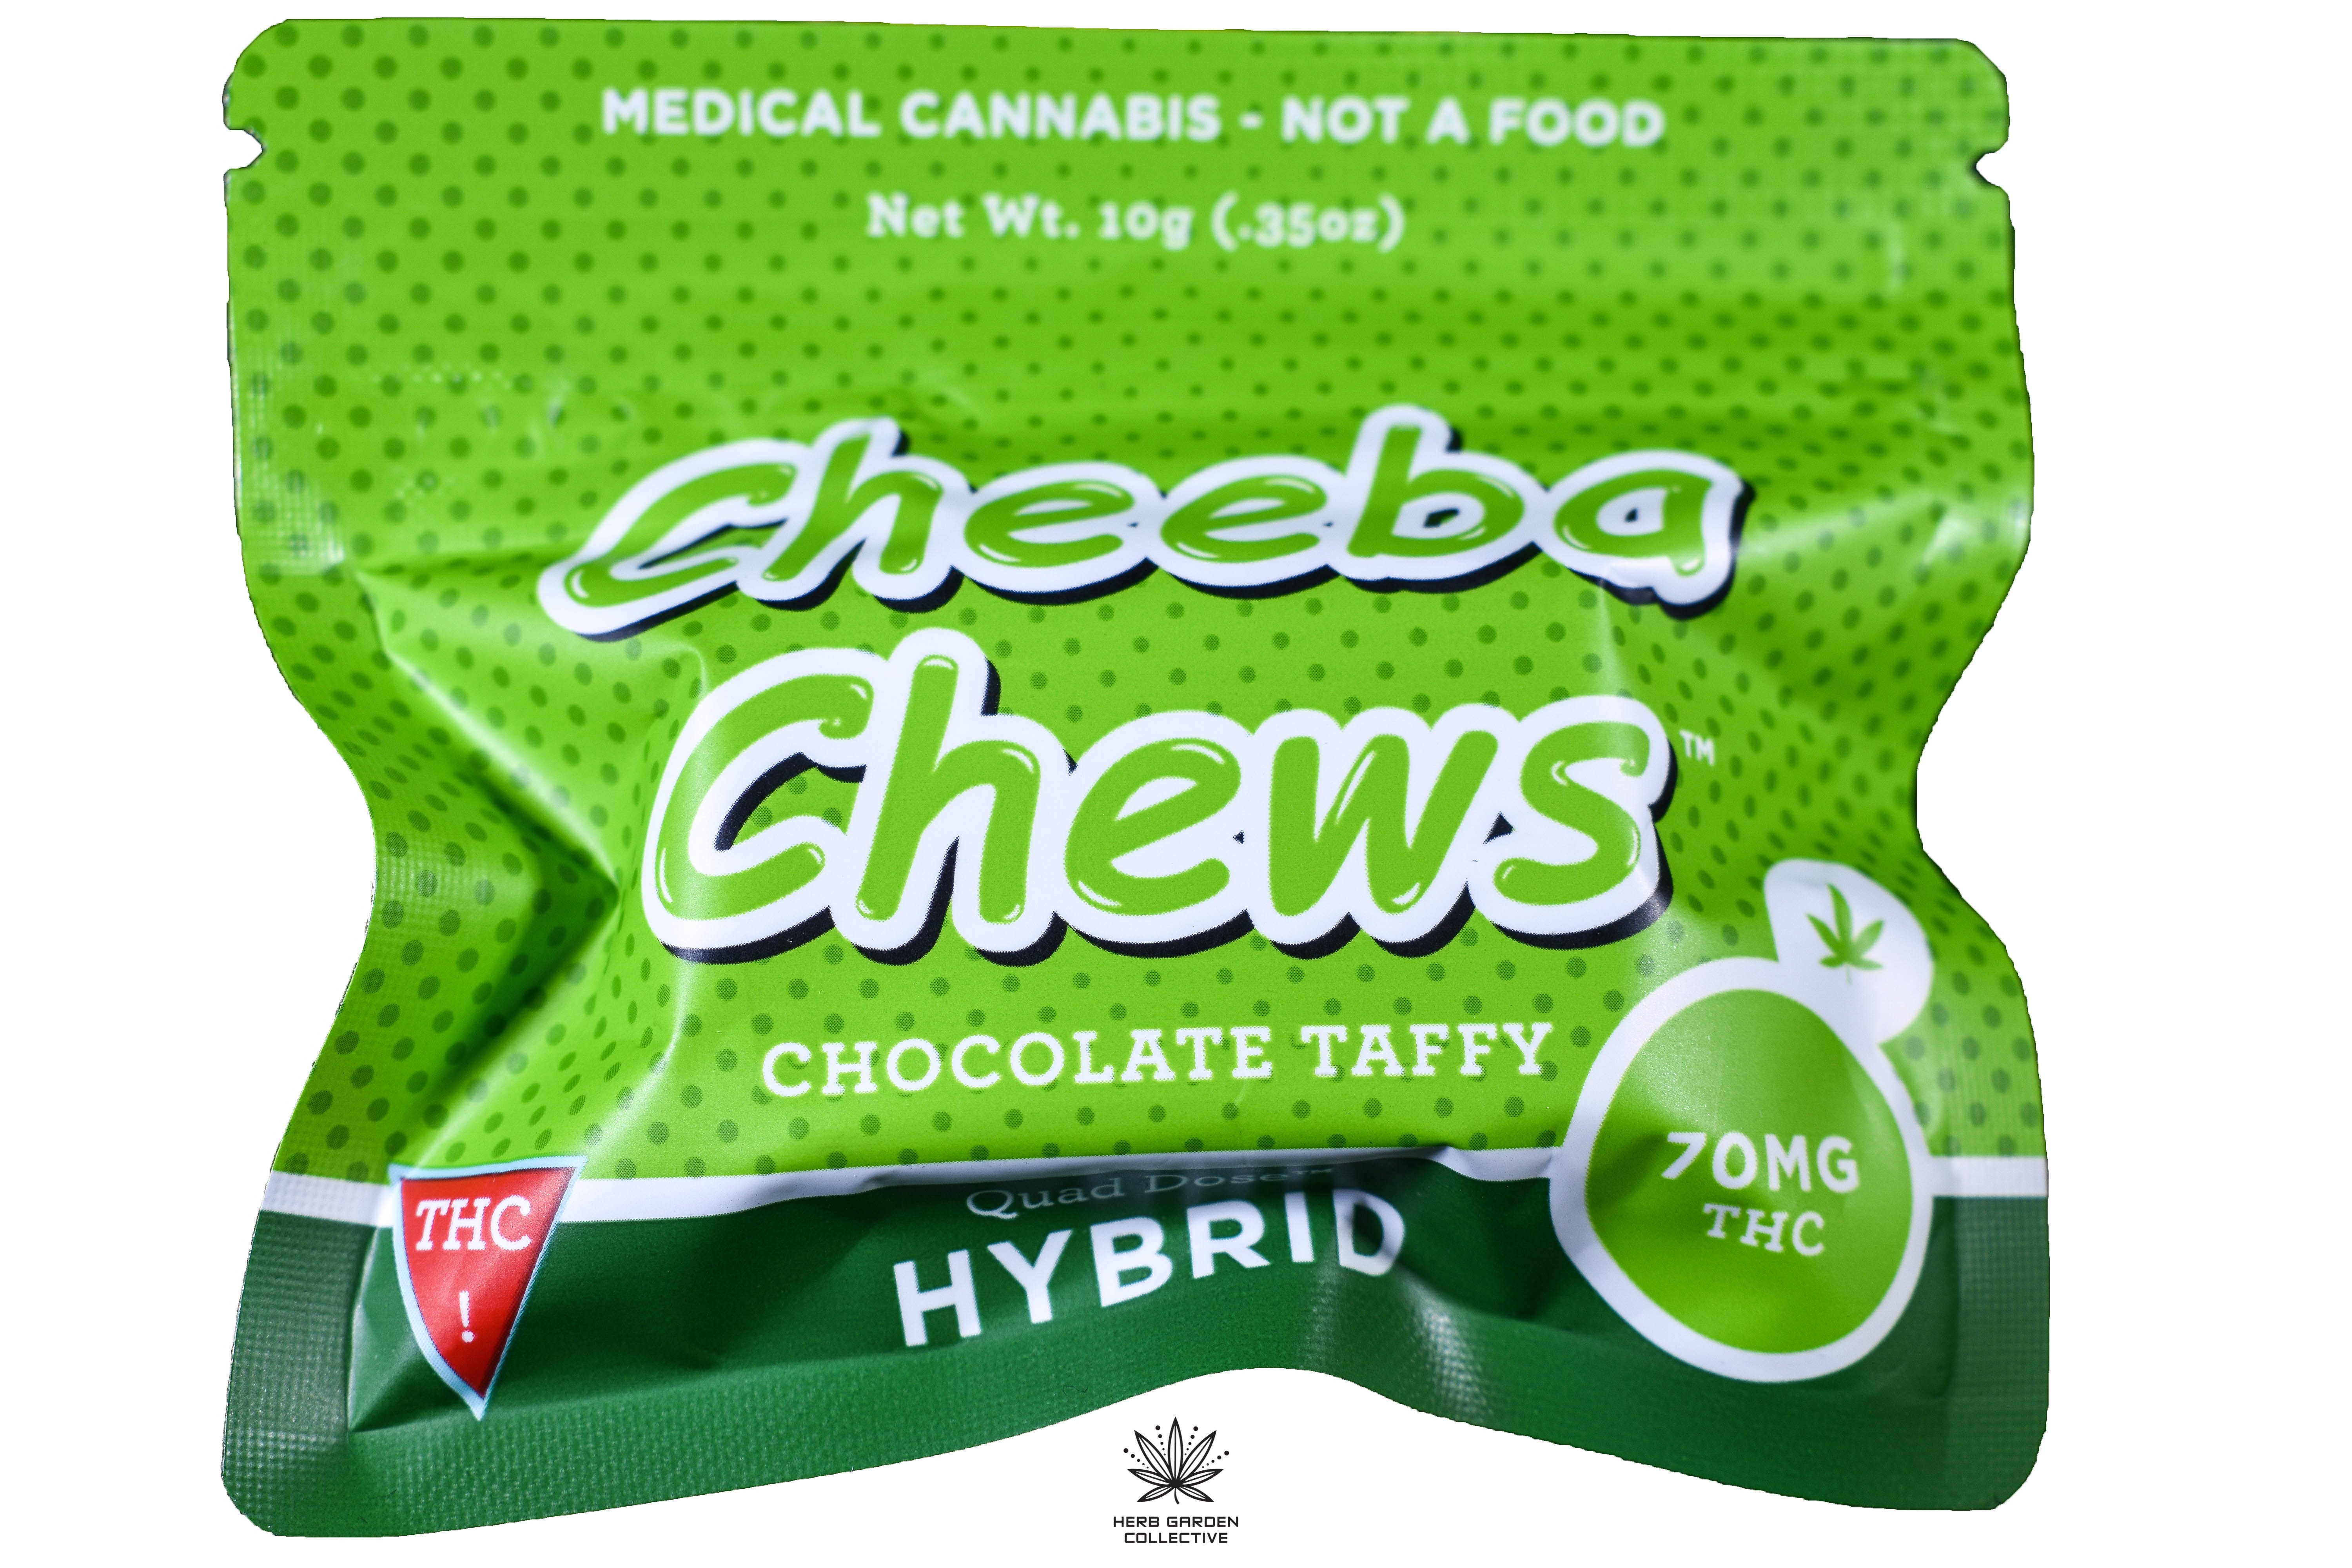 marijuana-dispensaries-820-south-main-st-los-angeles-cheeba-chews-chocolate-taffy-hybrid-70mg